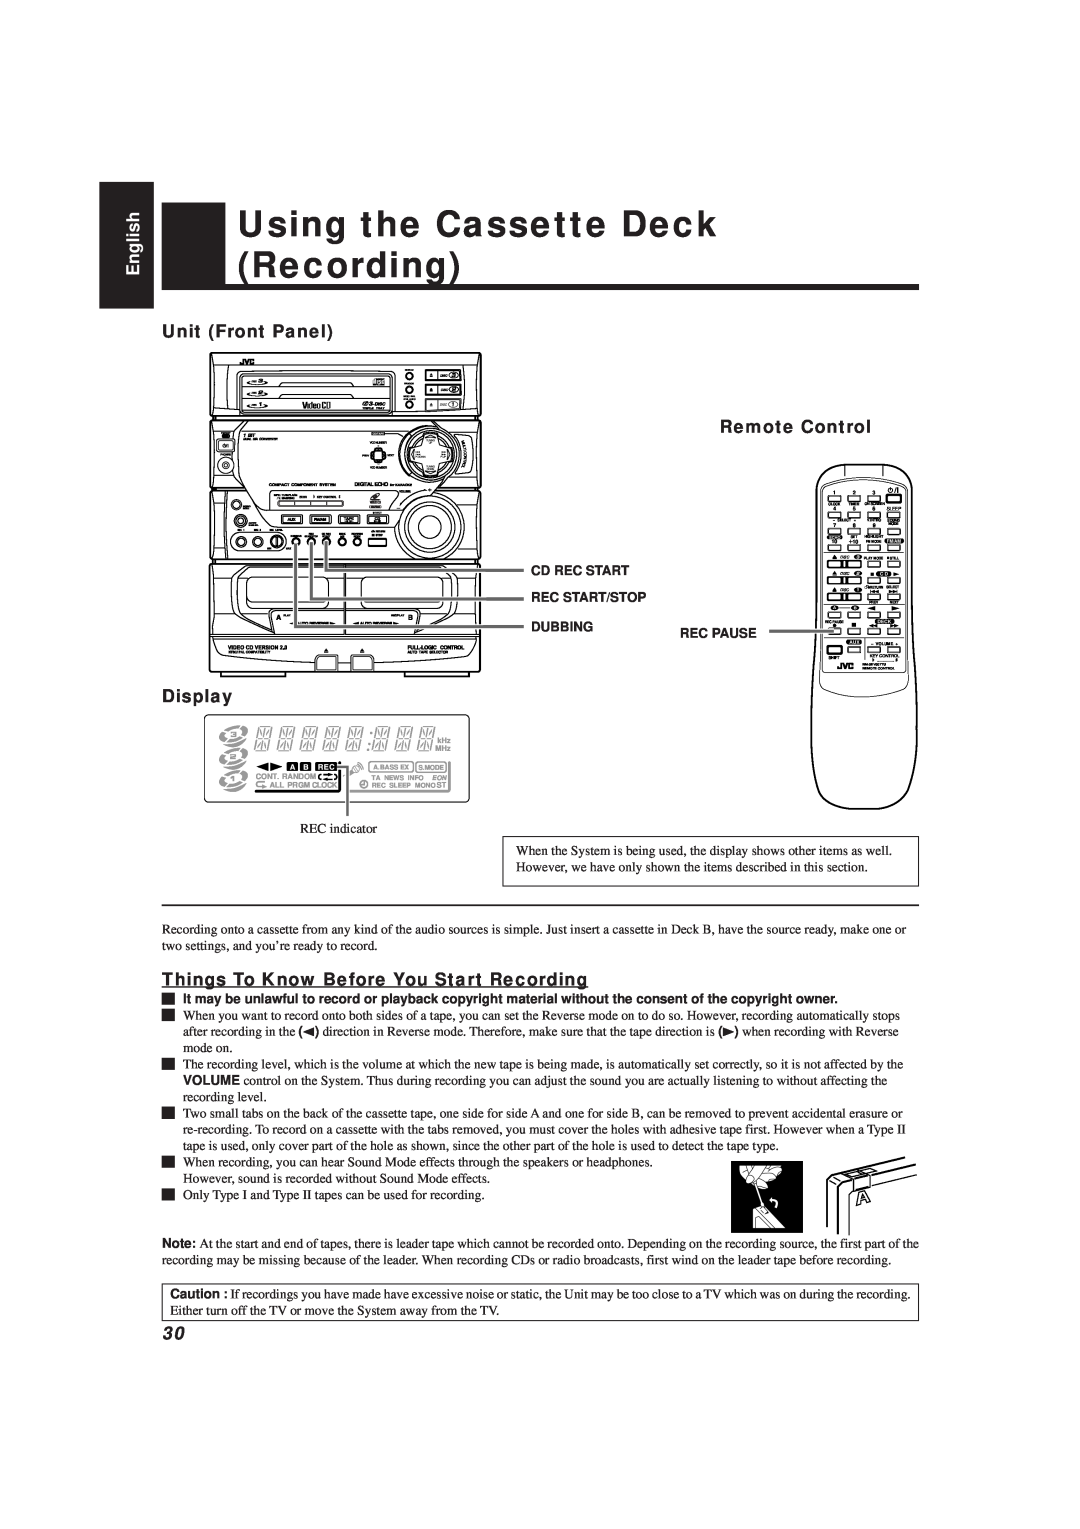 JVC MX-V508T, MX-V588T manual Using the Cassette Deck Recording, English, Unit Front Panel, Remote Control, Display 